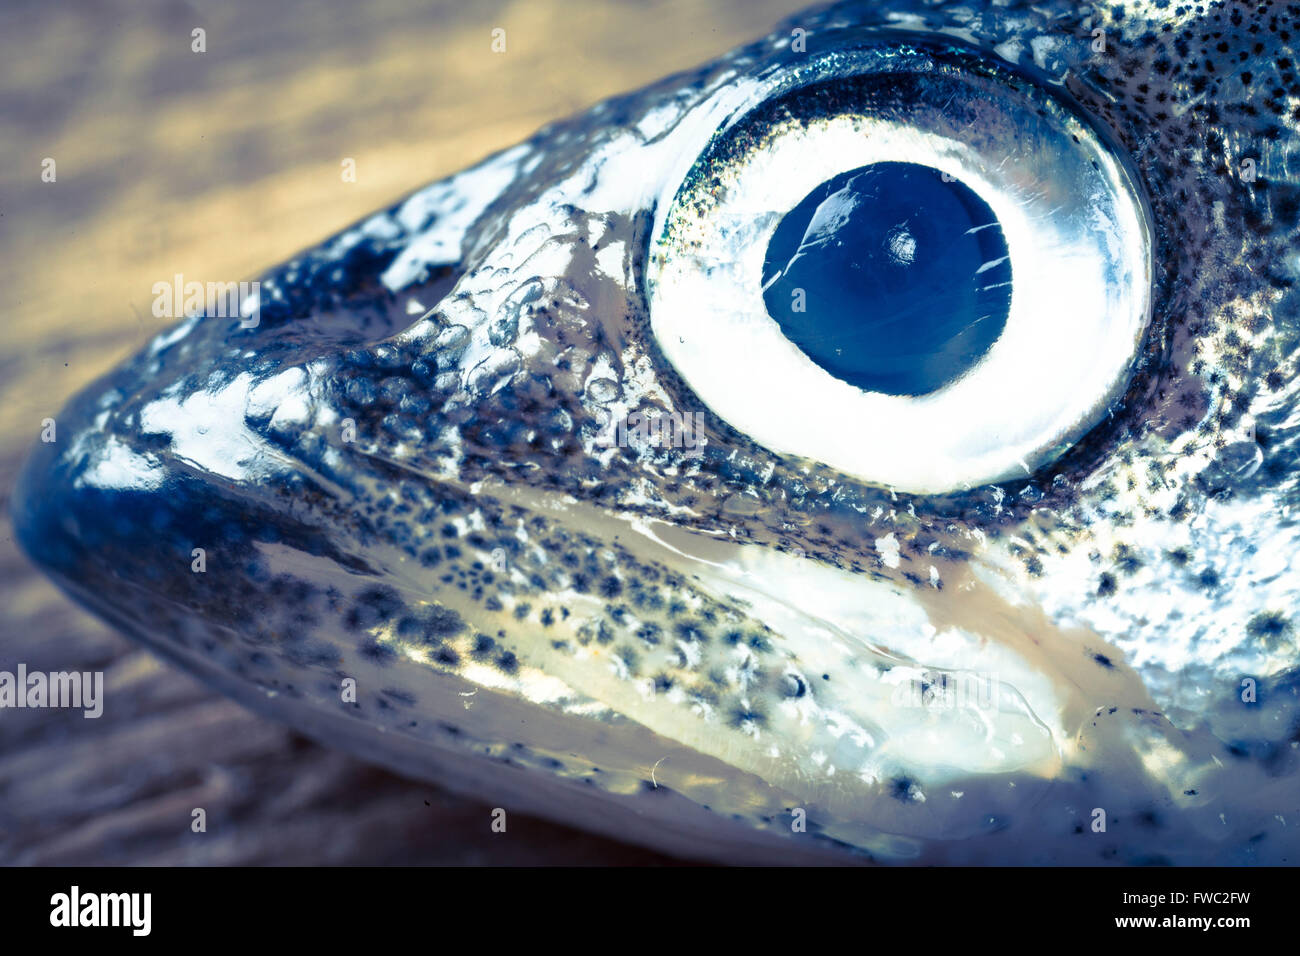 portrait of smelt fish closeup toned photo Stock Photo